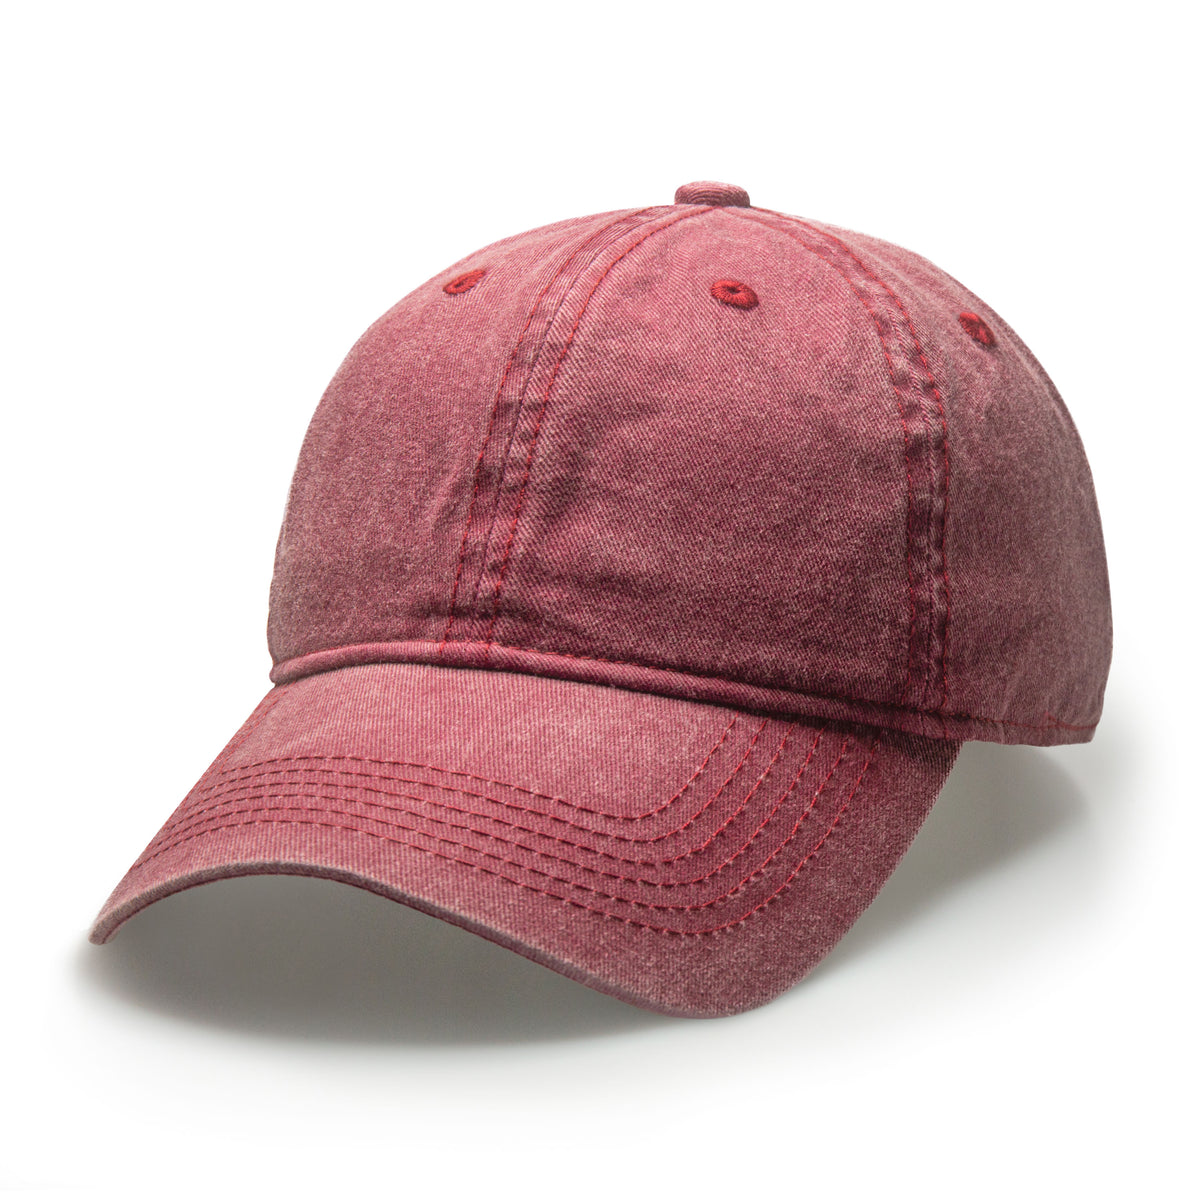 burgundy vintage baseball cap